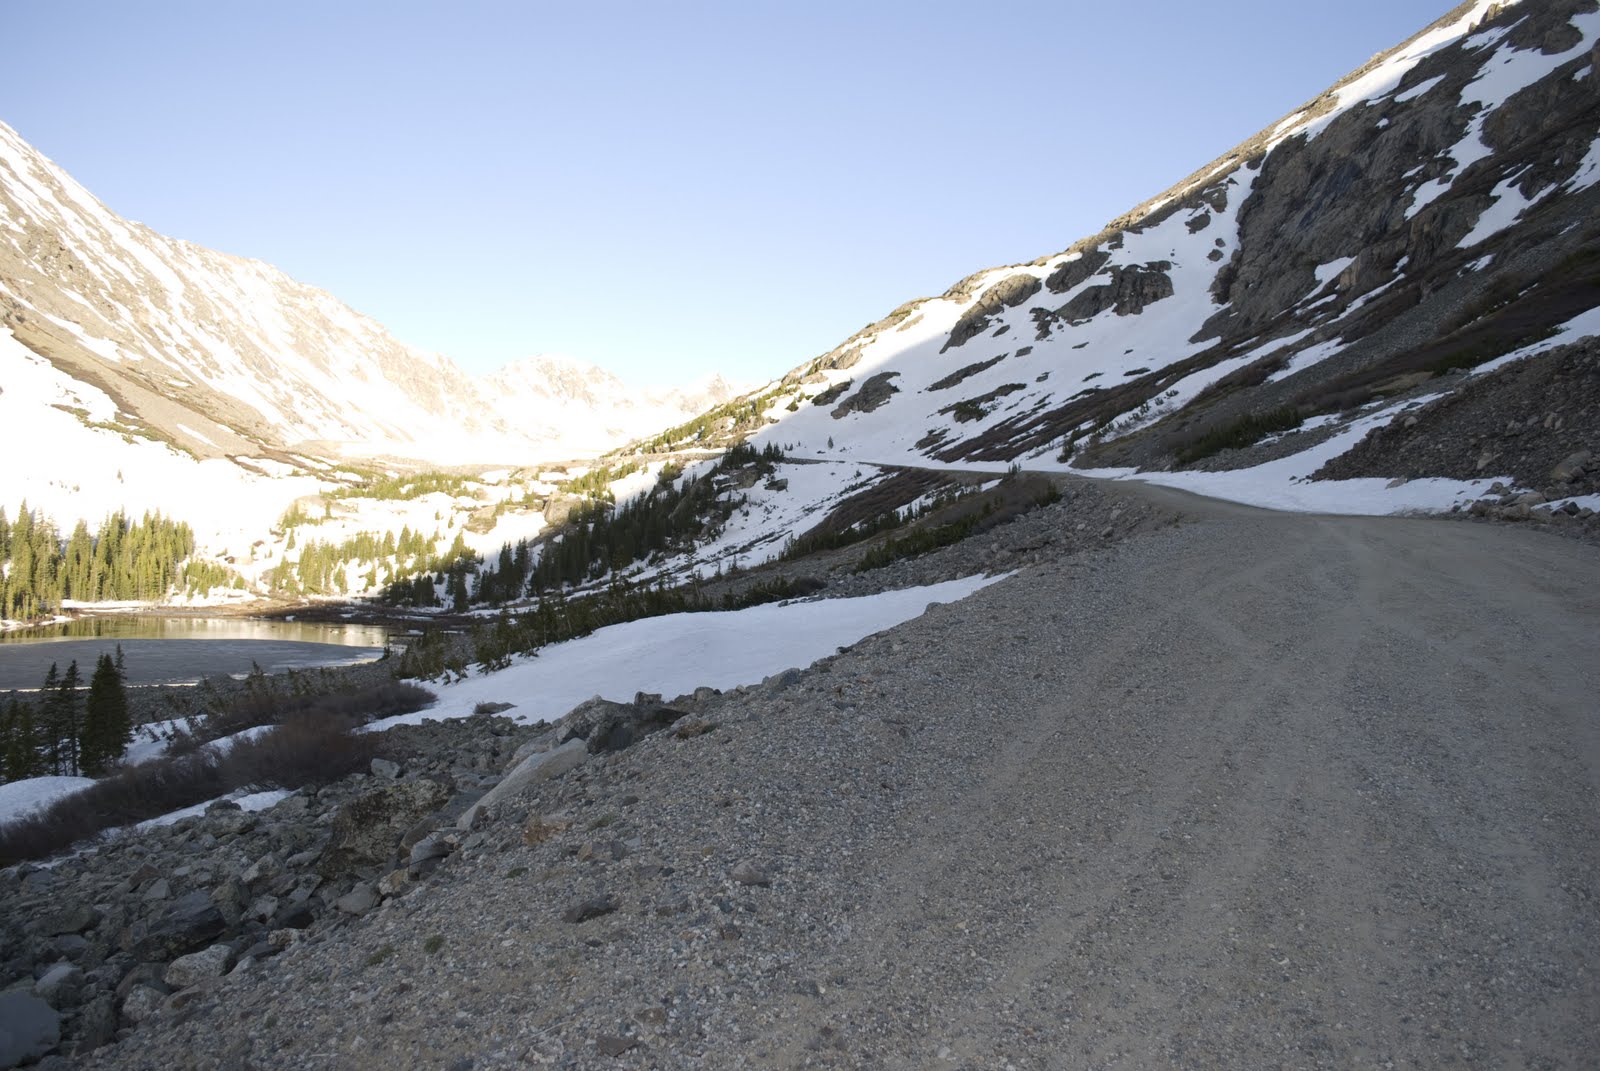 Quandary Peak Trail Conditions